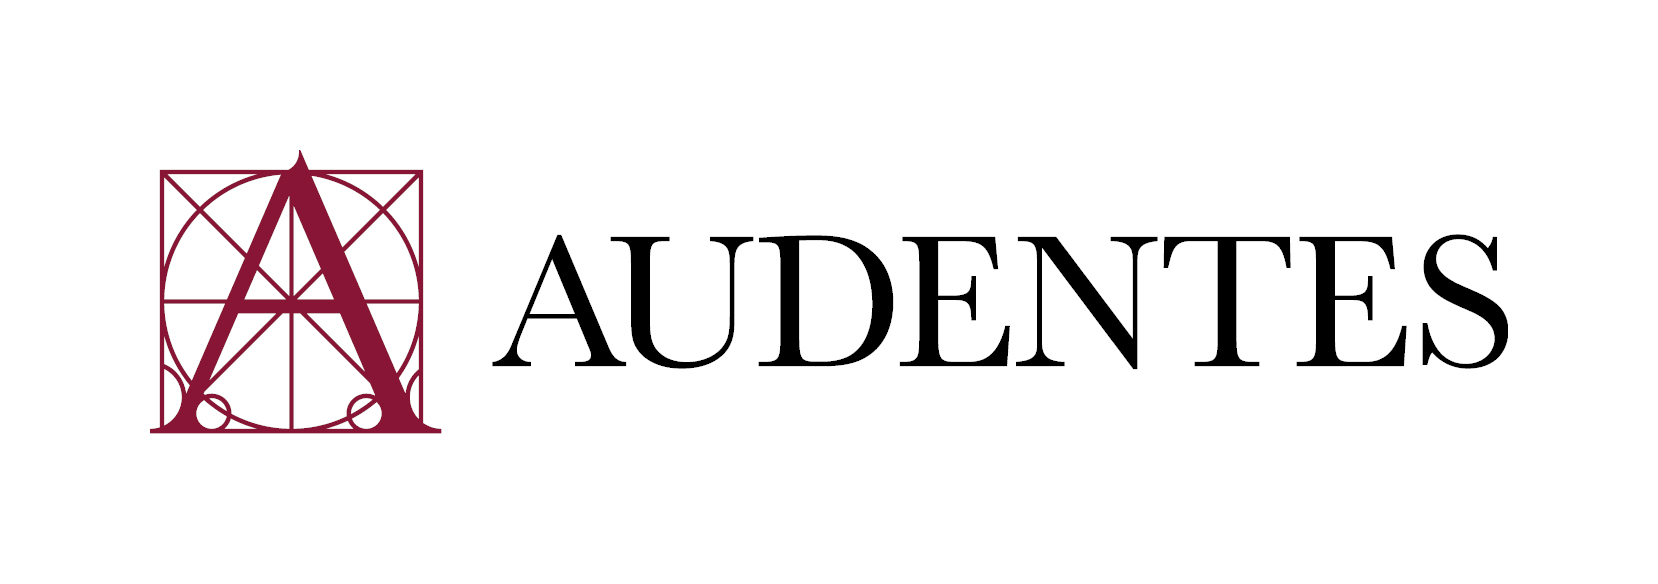 Audentes logo